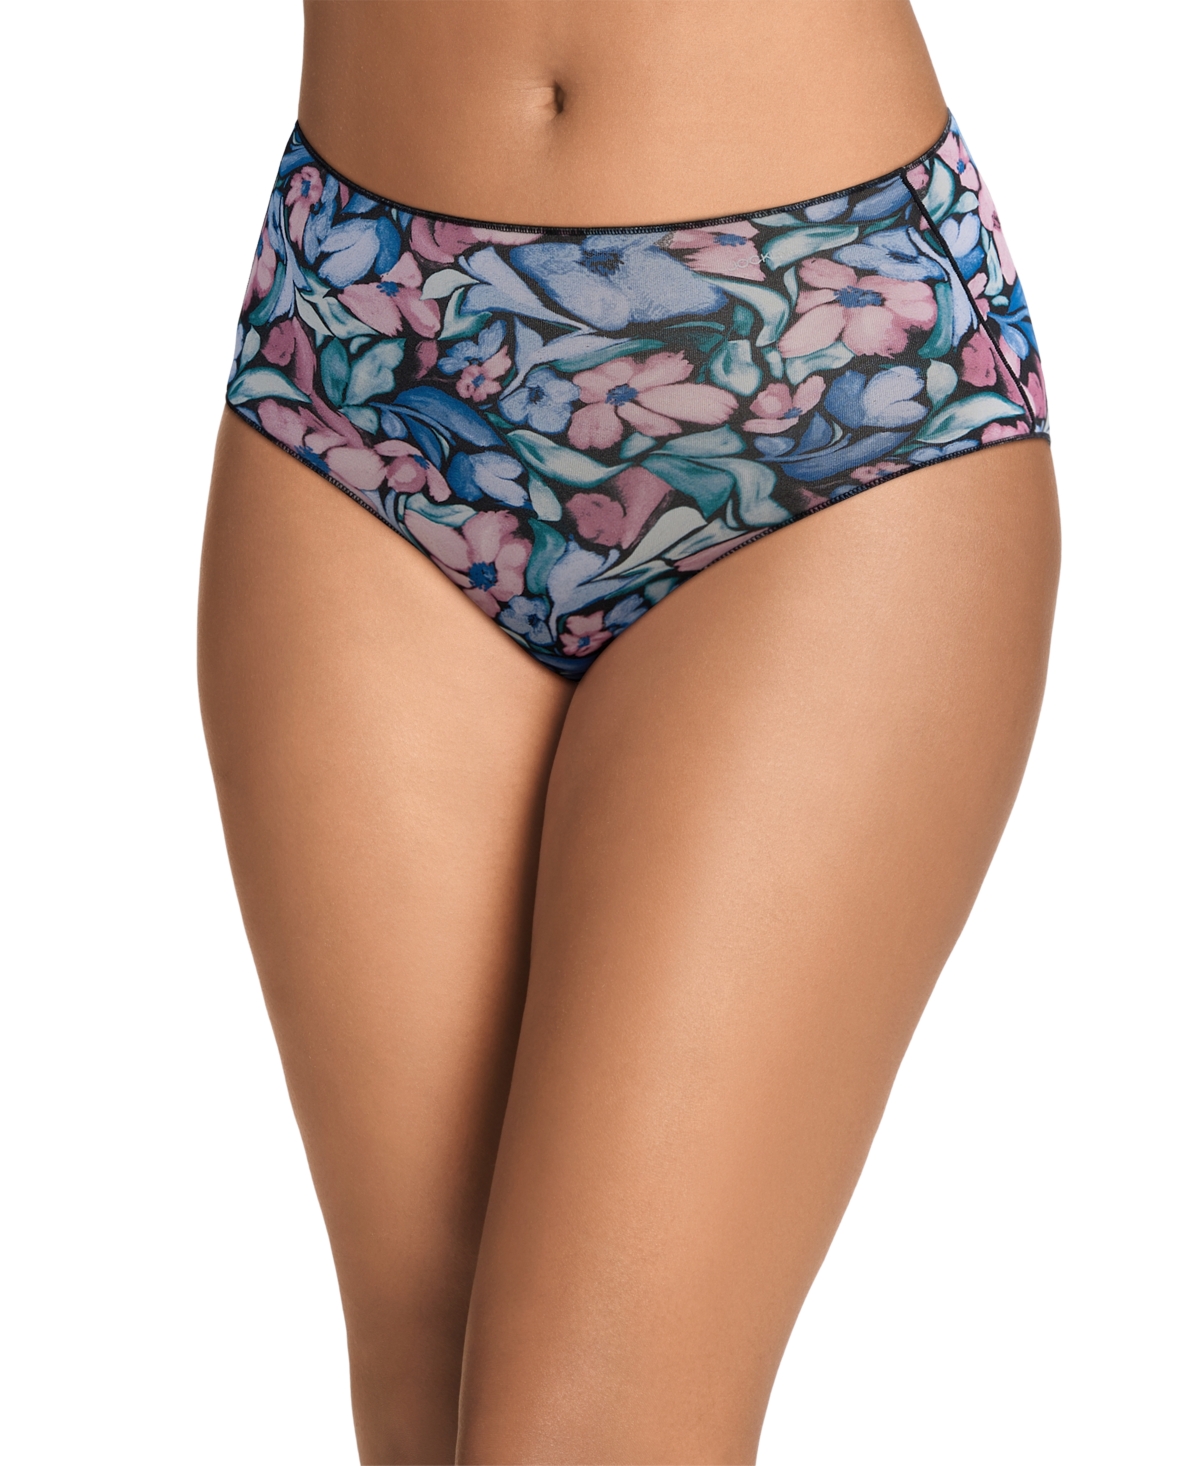 Women's No Panty Line Hip Brief Underwear 1372 - Wavy Floral